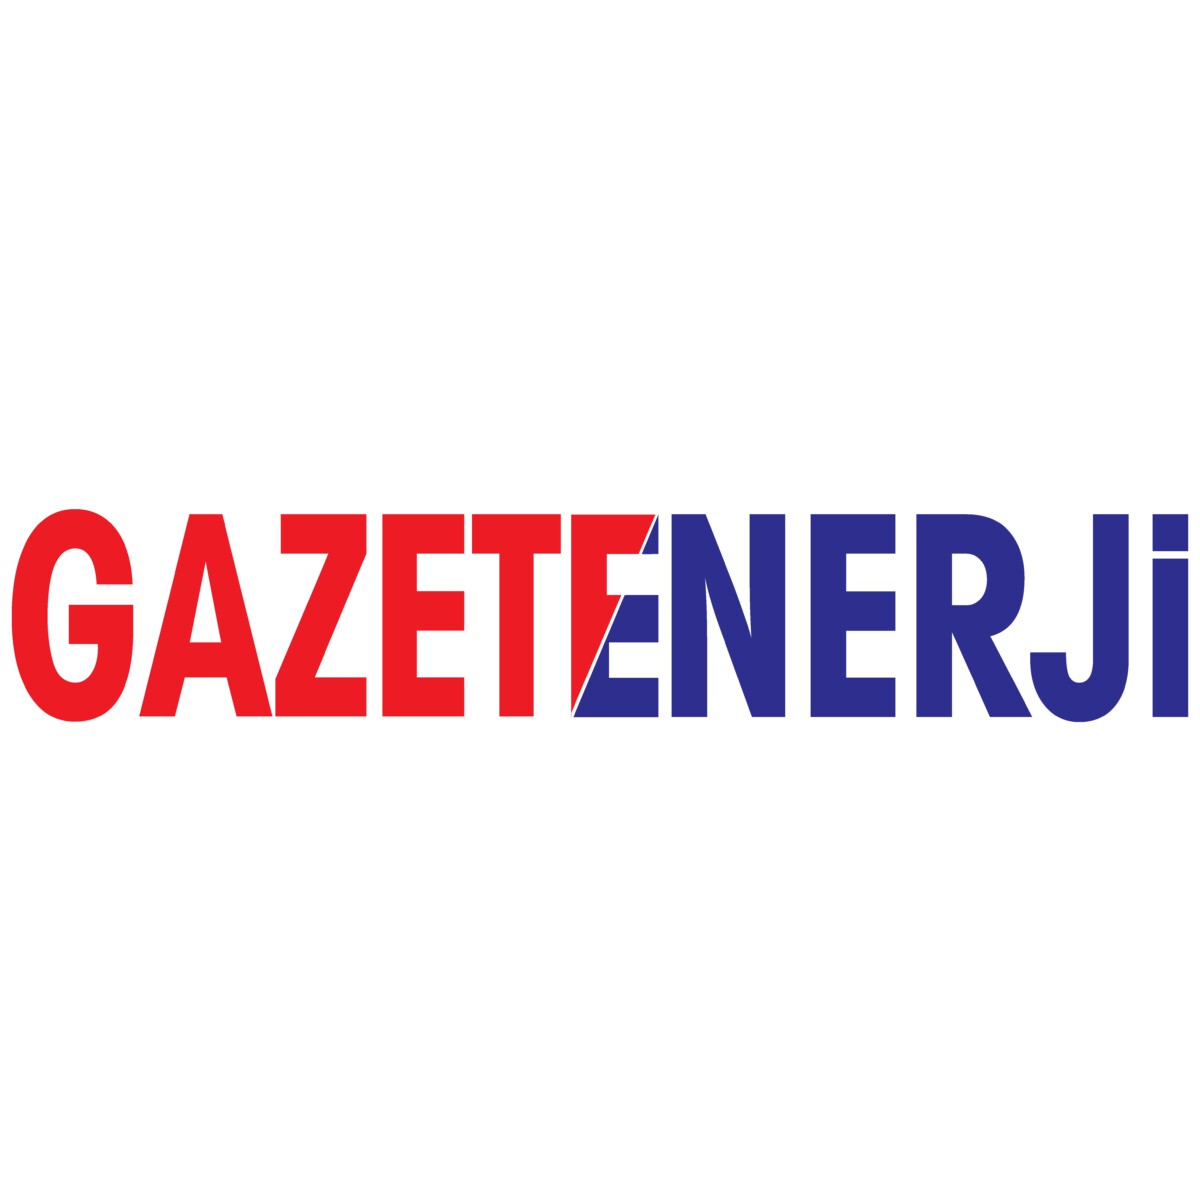 gazete enerji logo